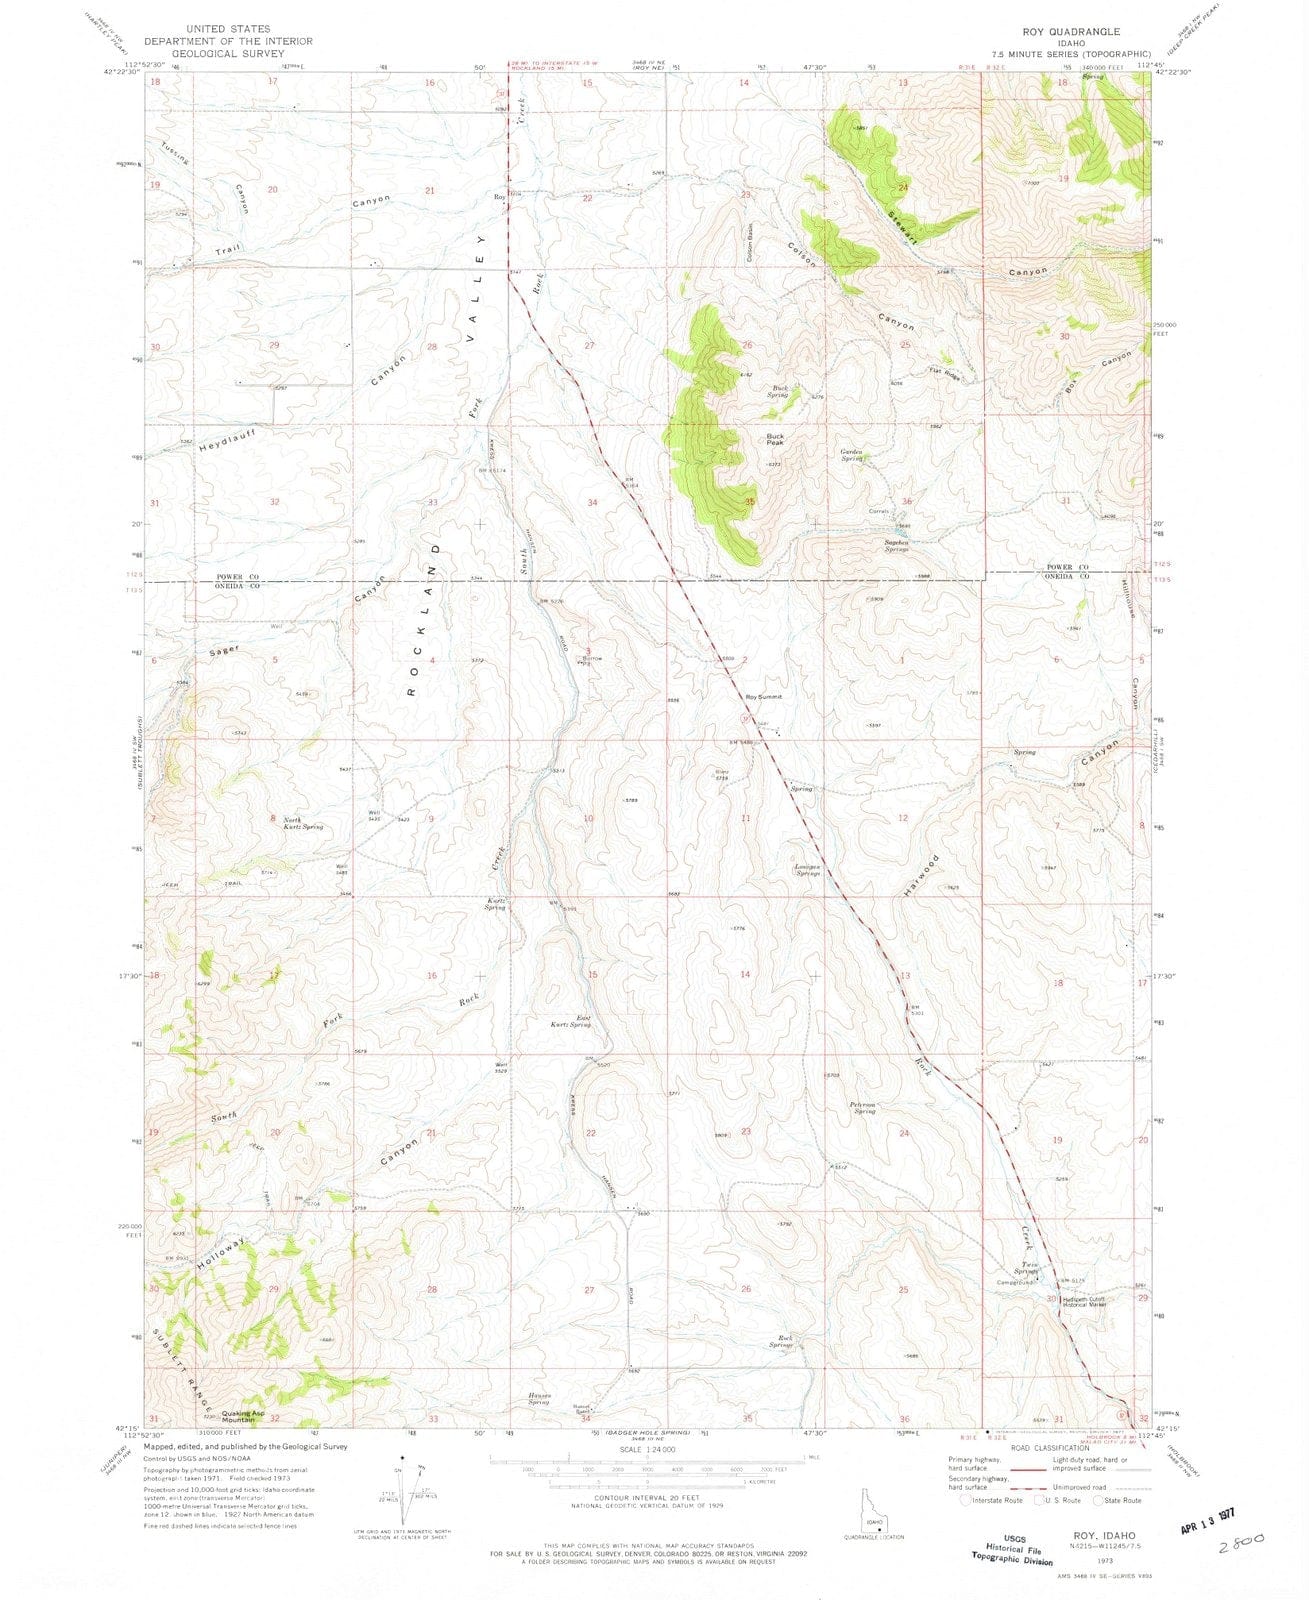 1973 Roy, ID - Idaho - USGS Topographic Map v2